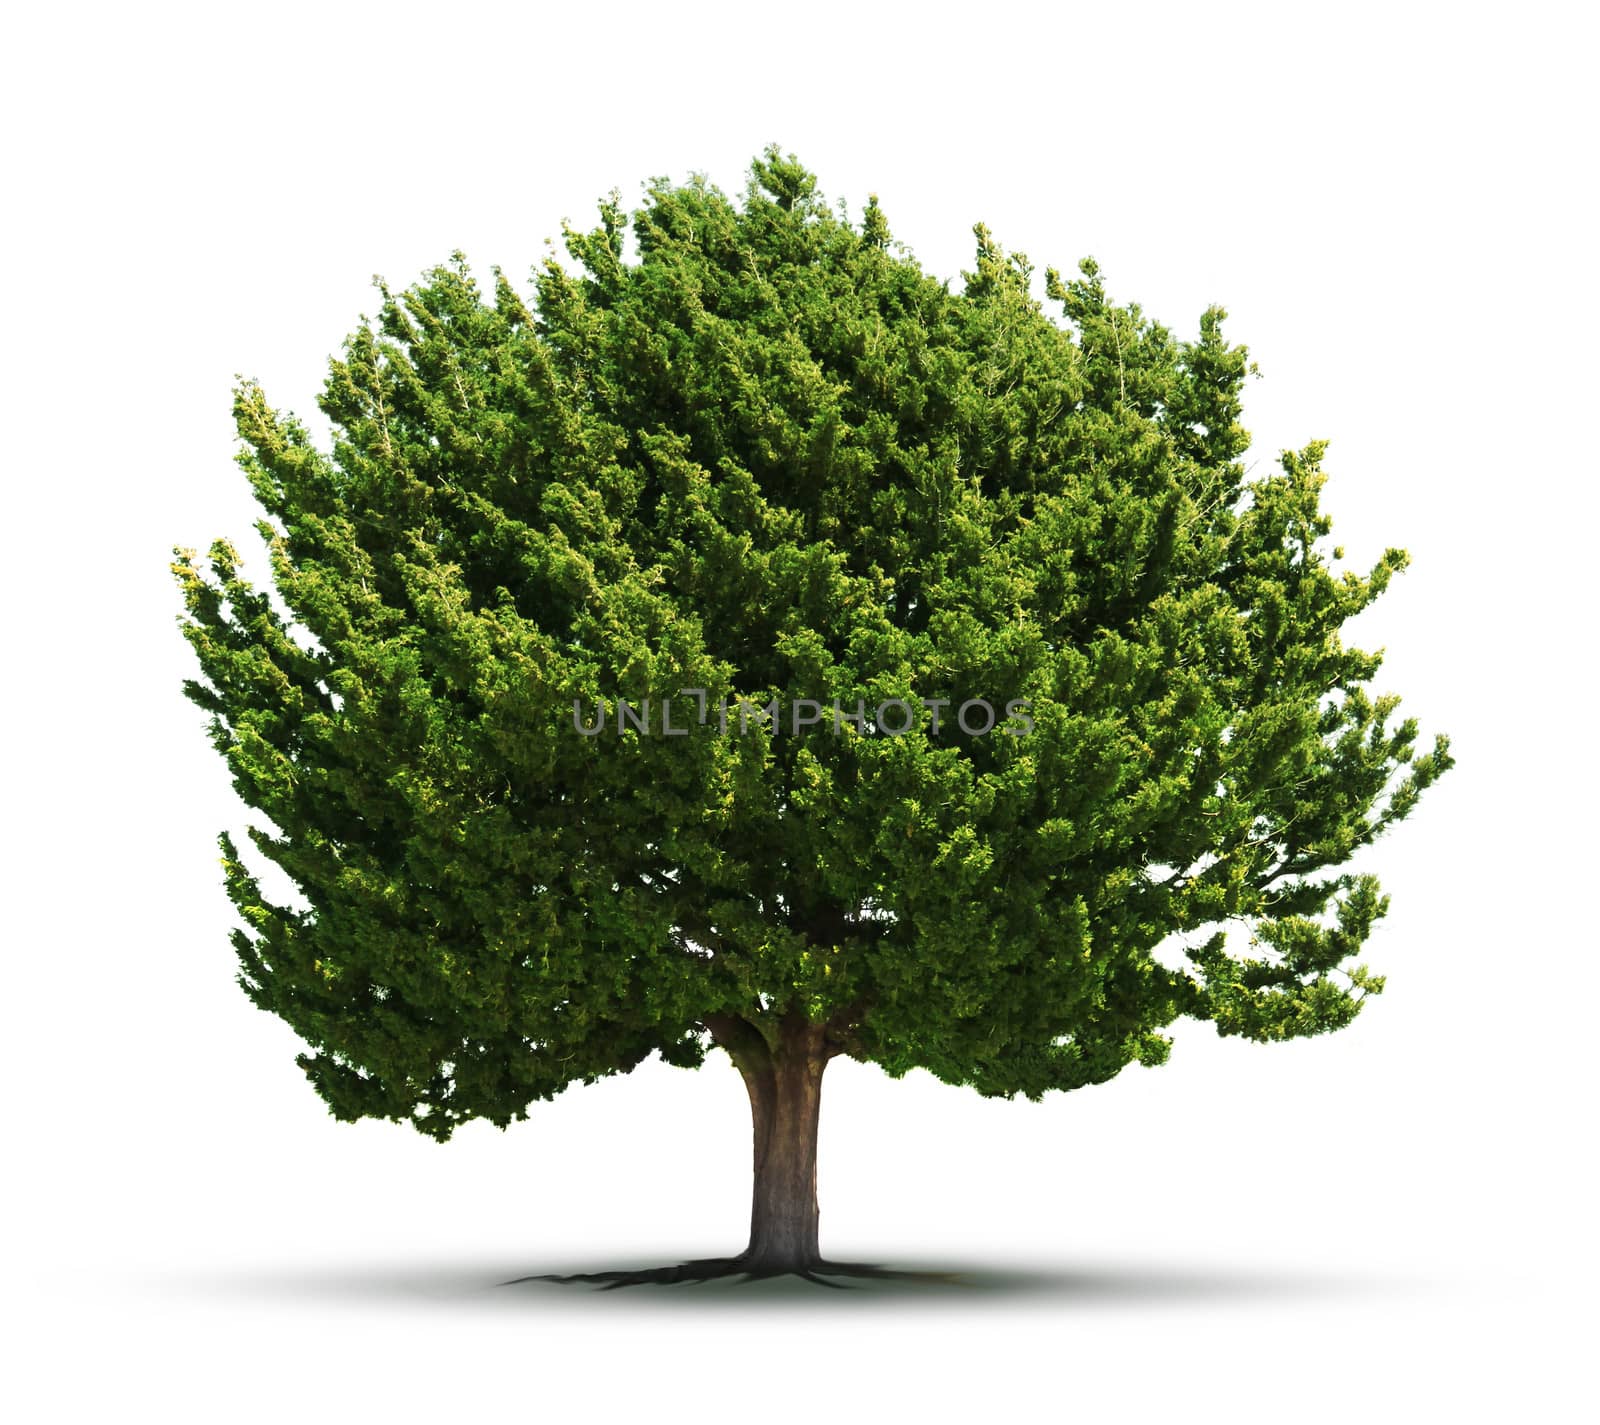 Big green tree isolated by anterovium